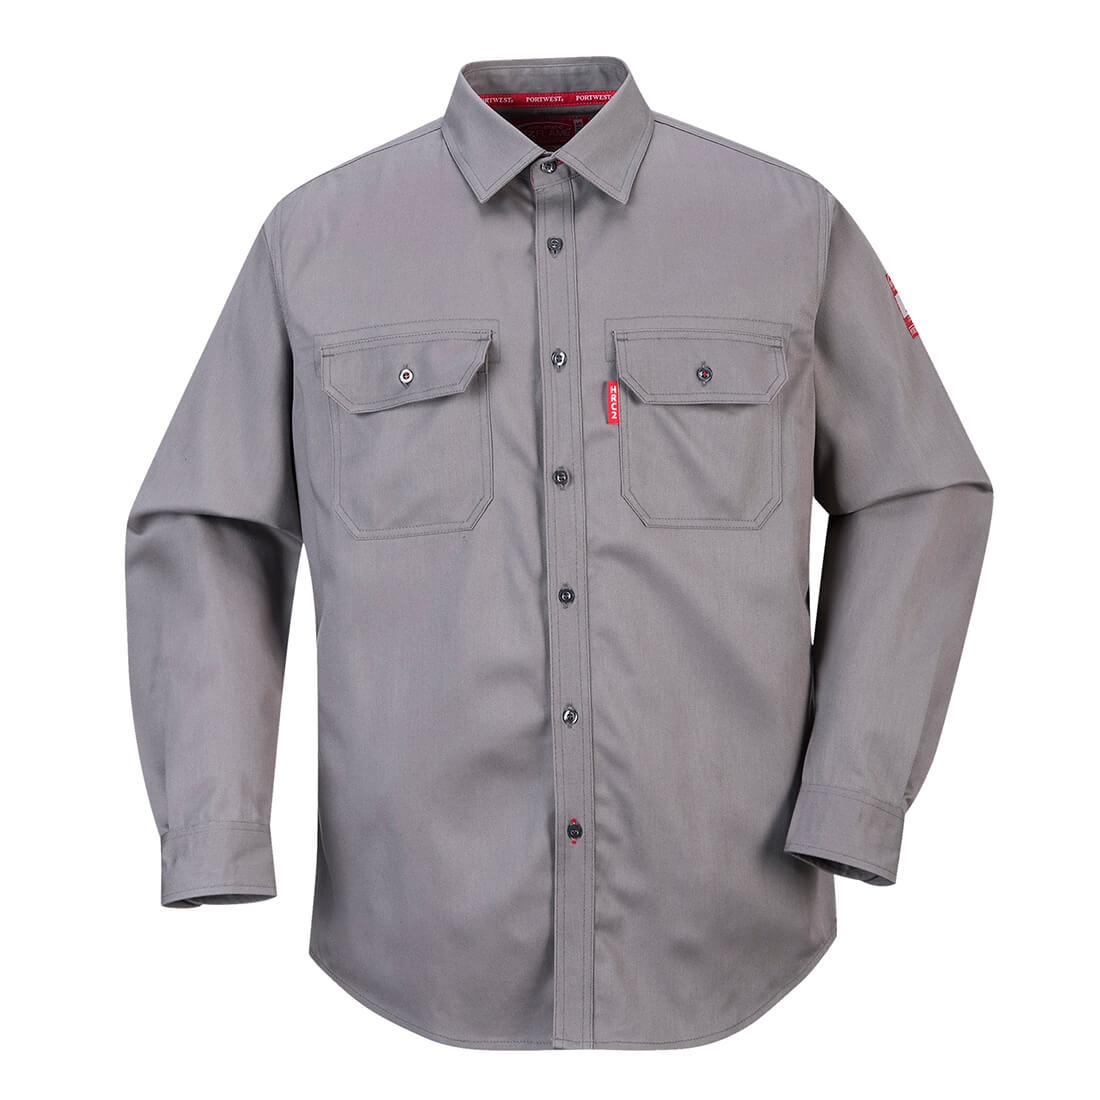 Image of Biz Flame Mens Flame Resistant Work Shirt Grey M